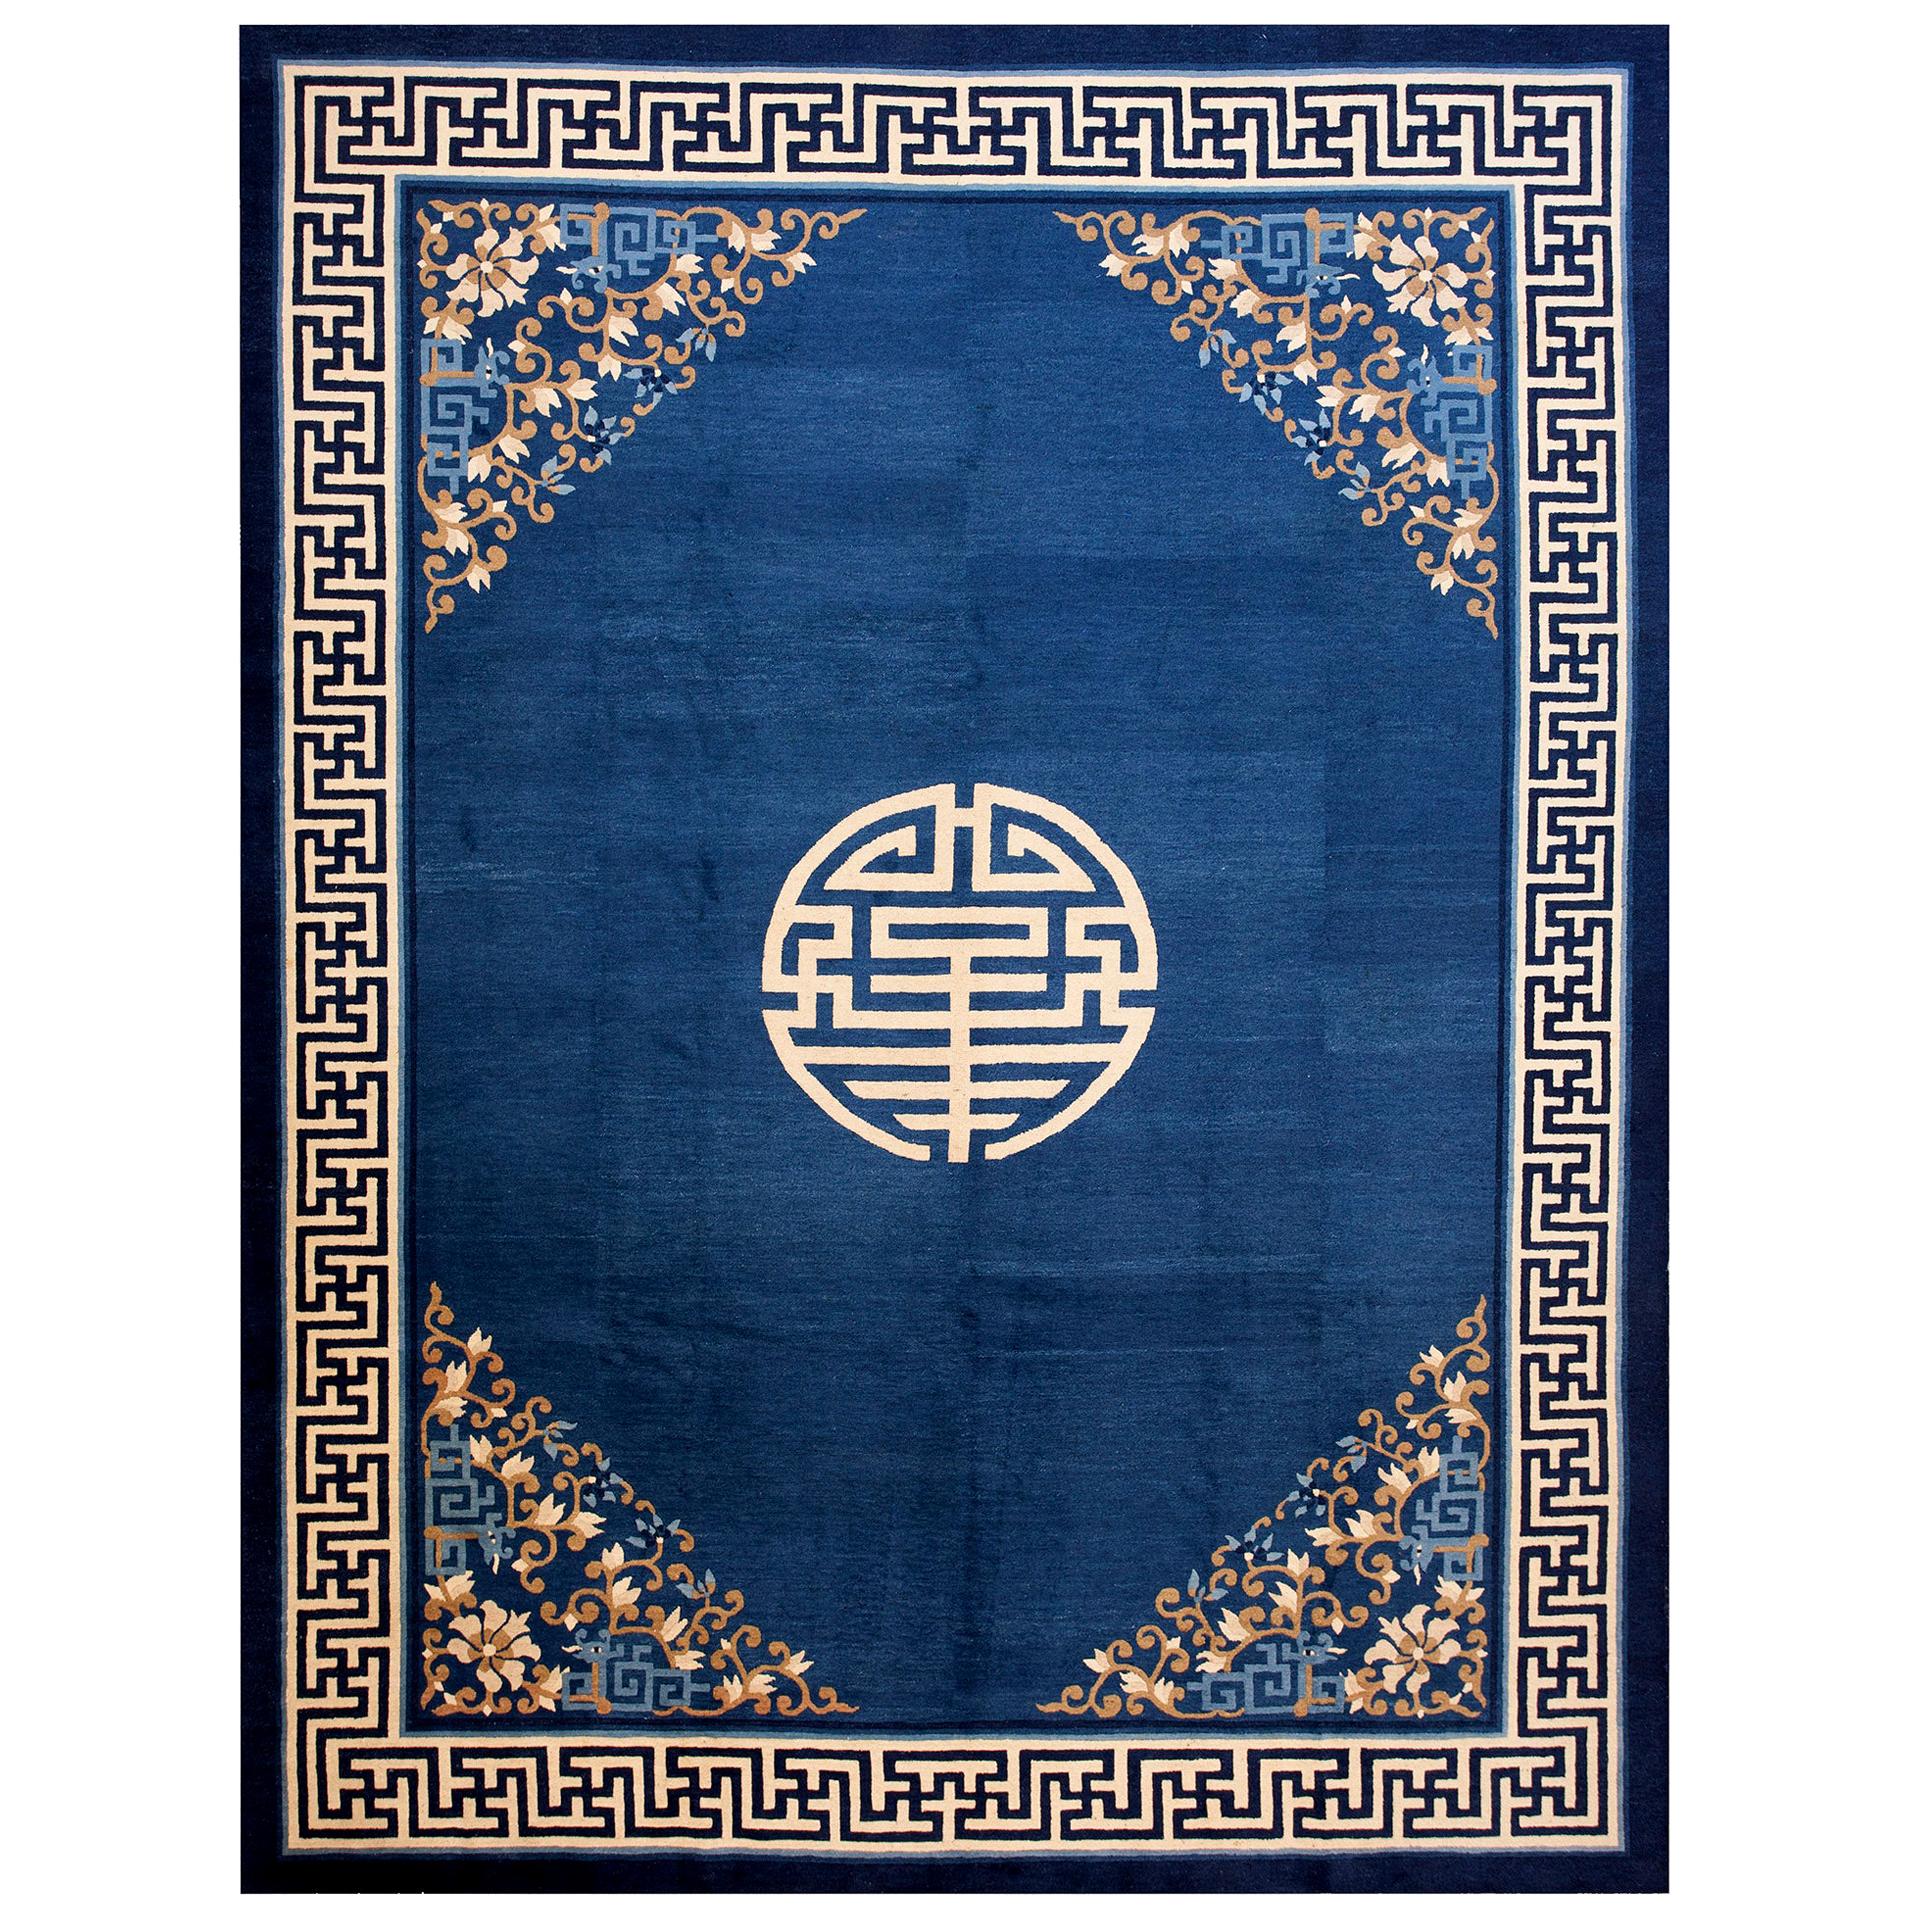 Early 20th Century Chinese Peking Carpet ( 9'2" x 11'4" - 279 x 345 )